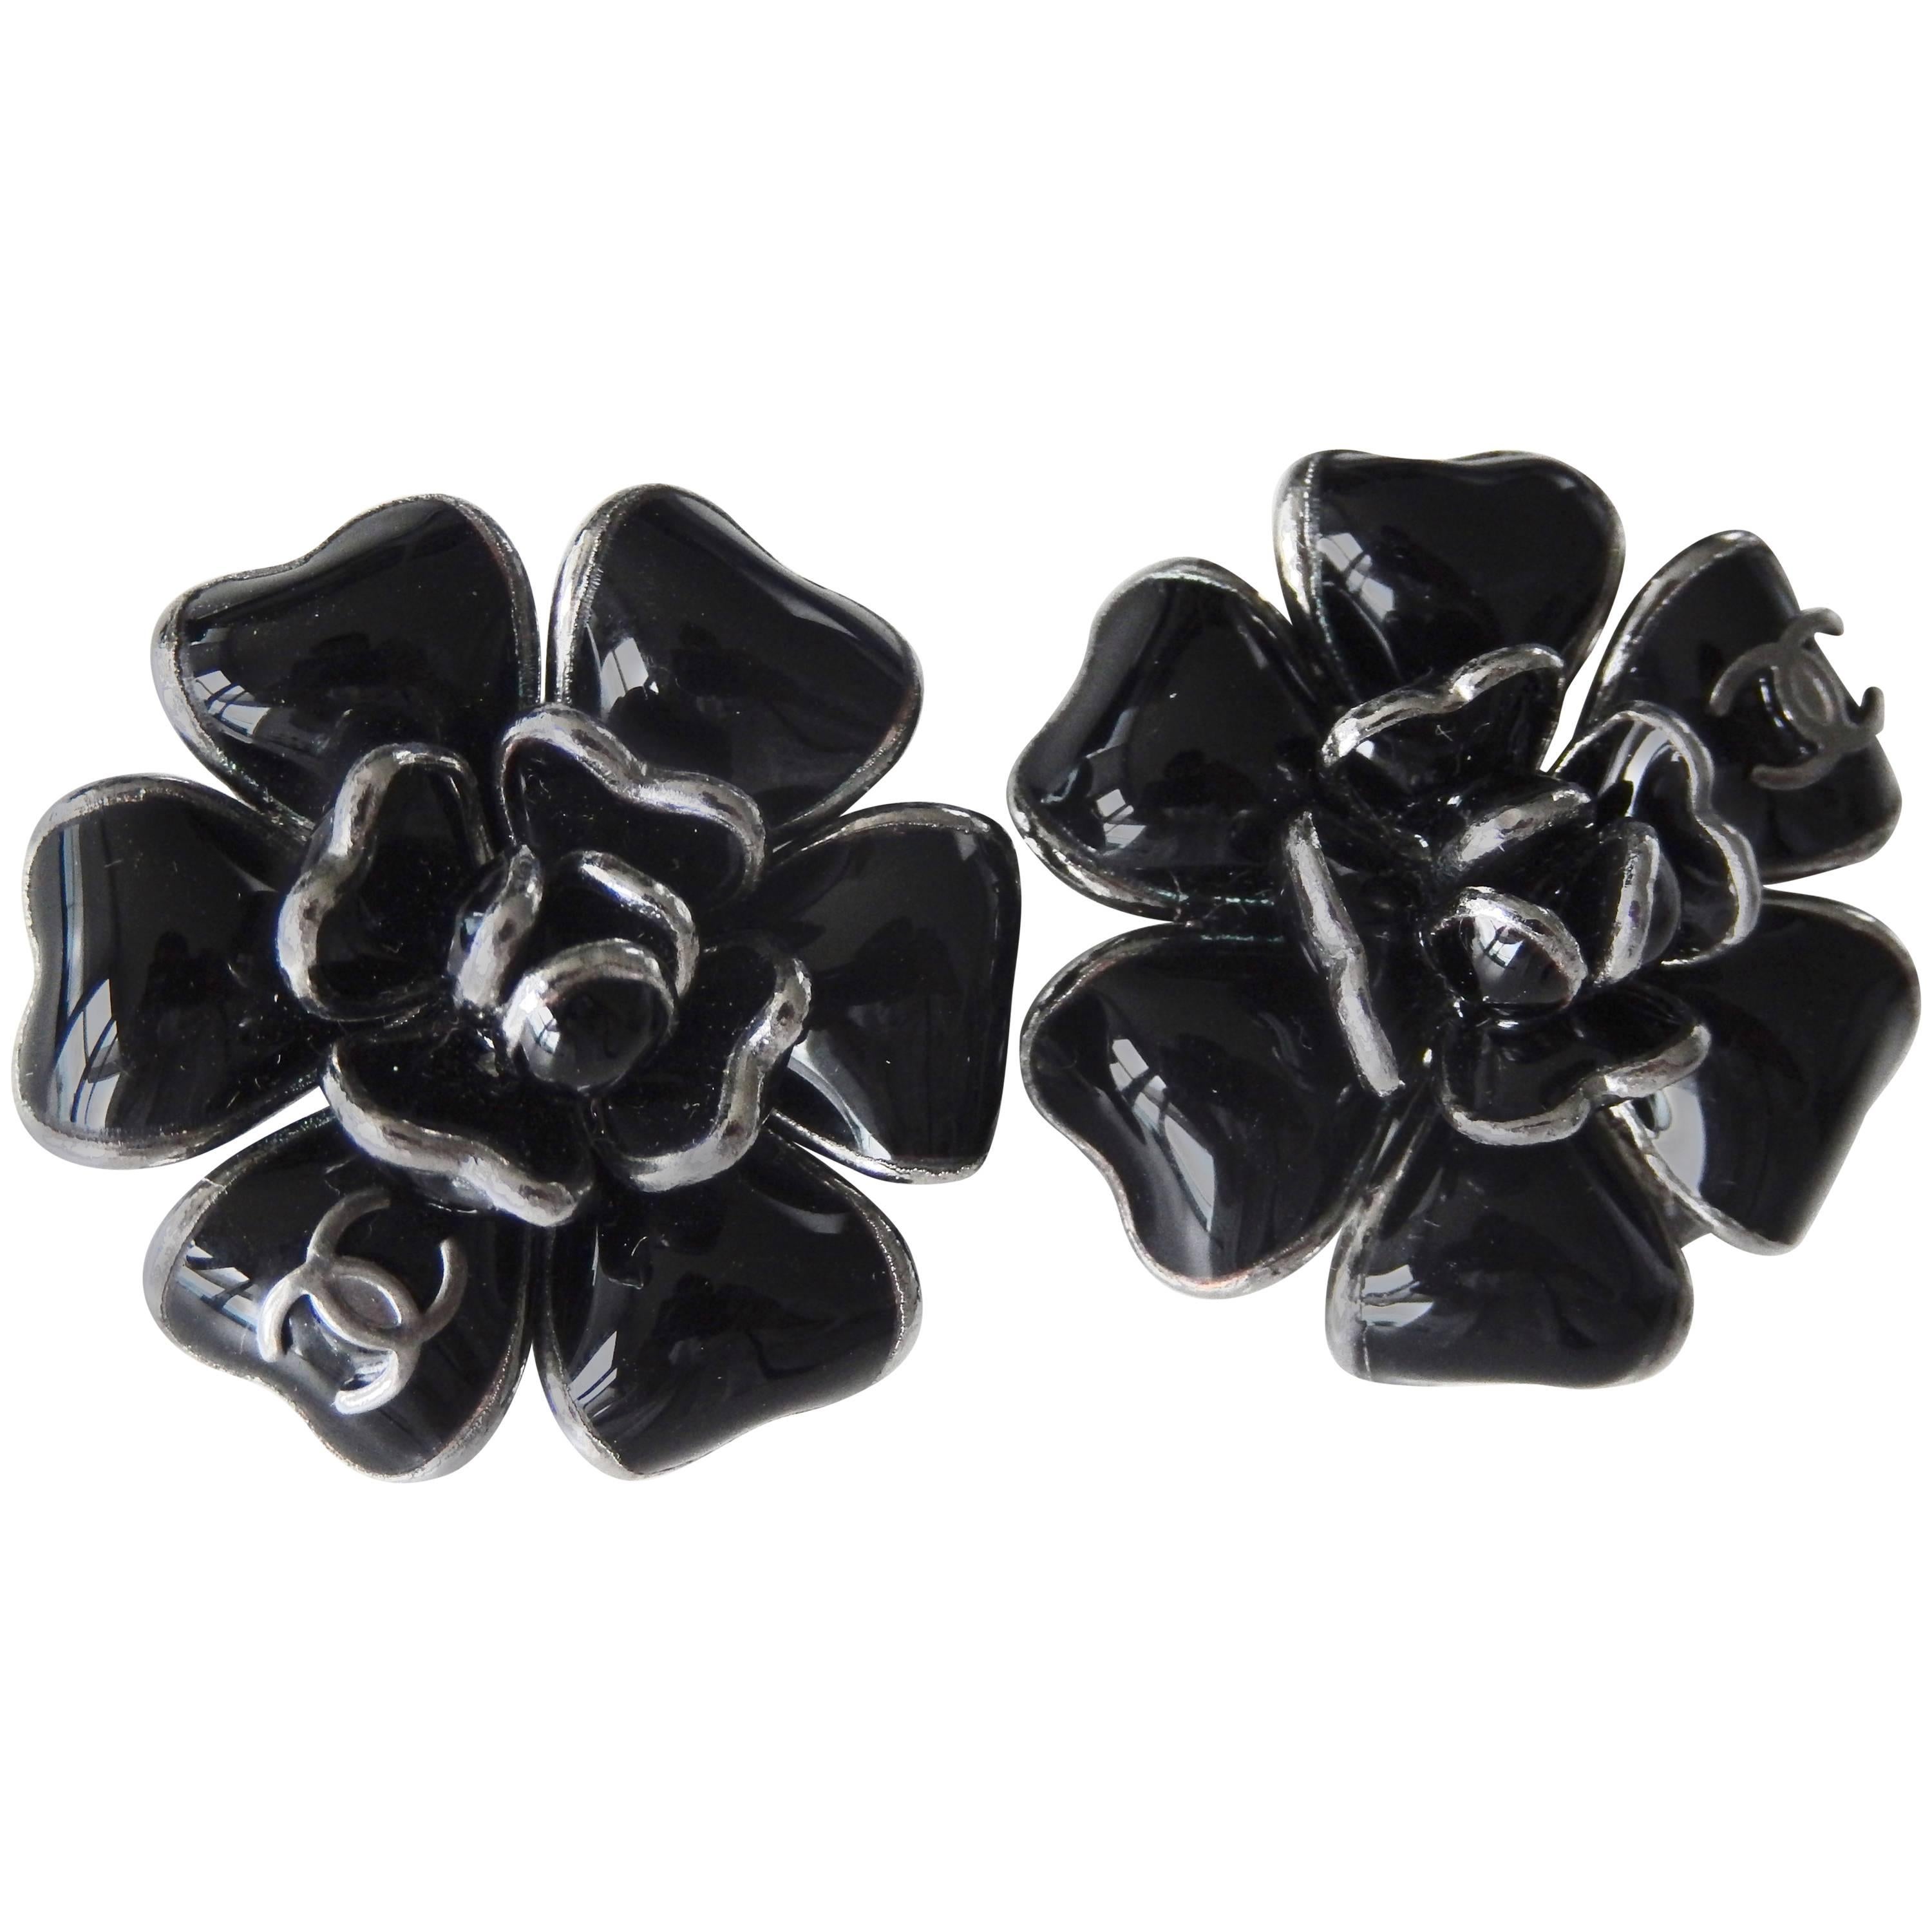  Vintage Chanel Black Gripoix "Camellia" Floral Earrings